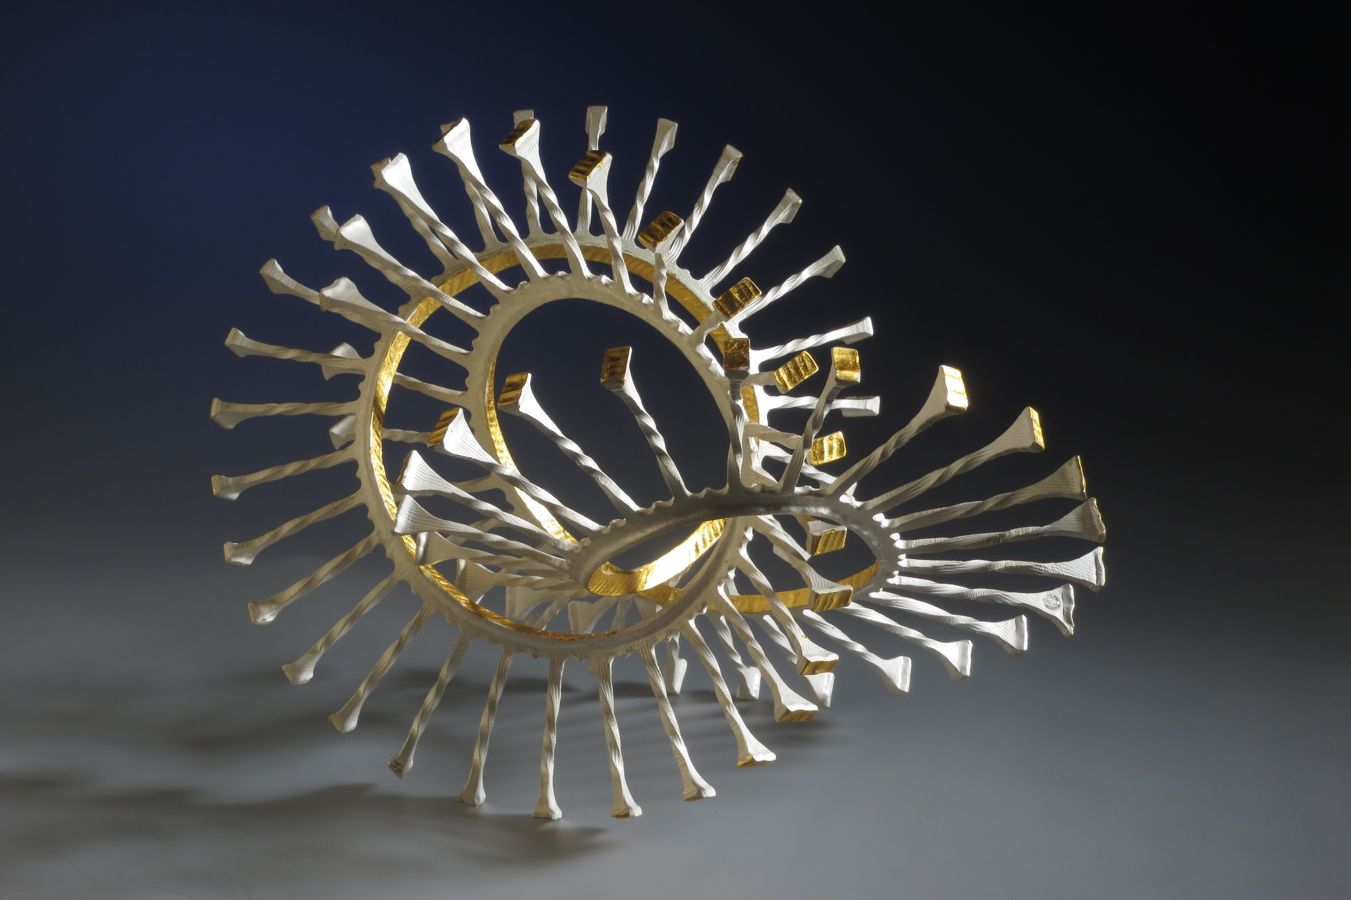 Piece -- materials: silver, gold leaf; dimensions: 22 x 29 x 23 h cm;